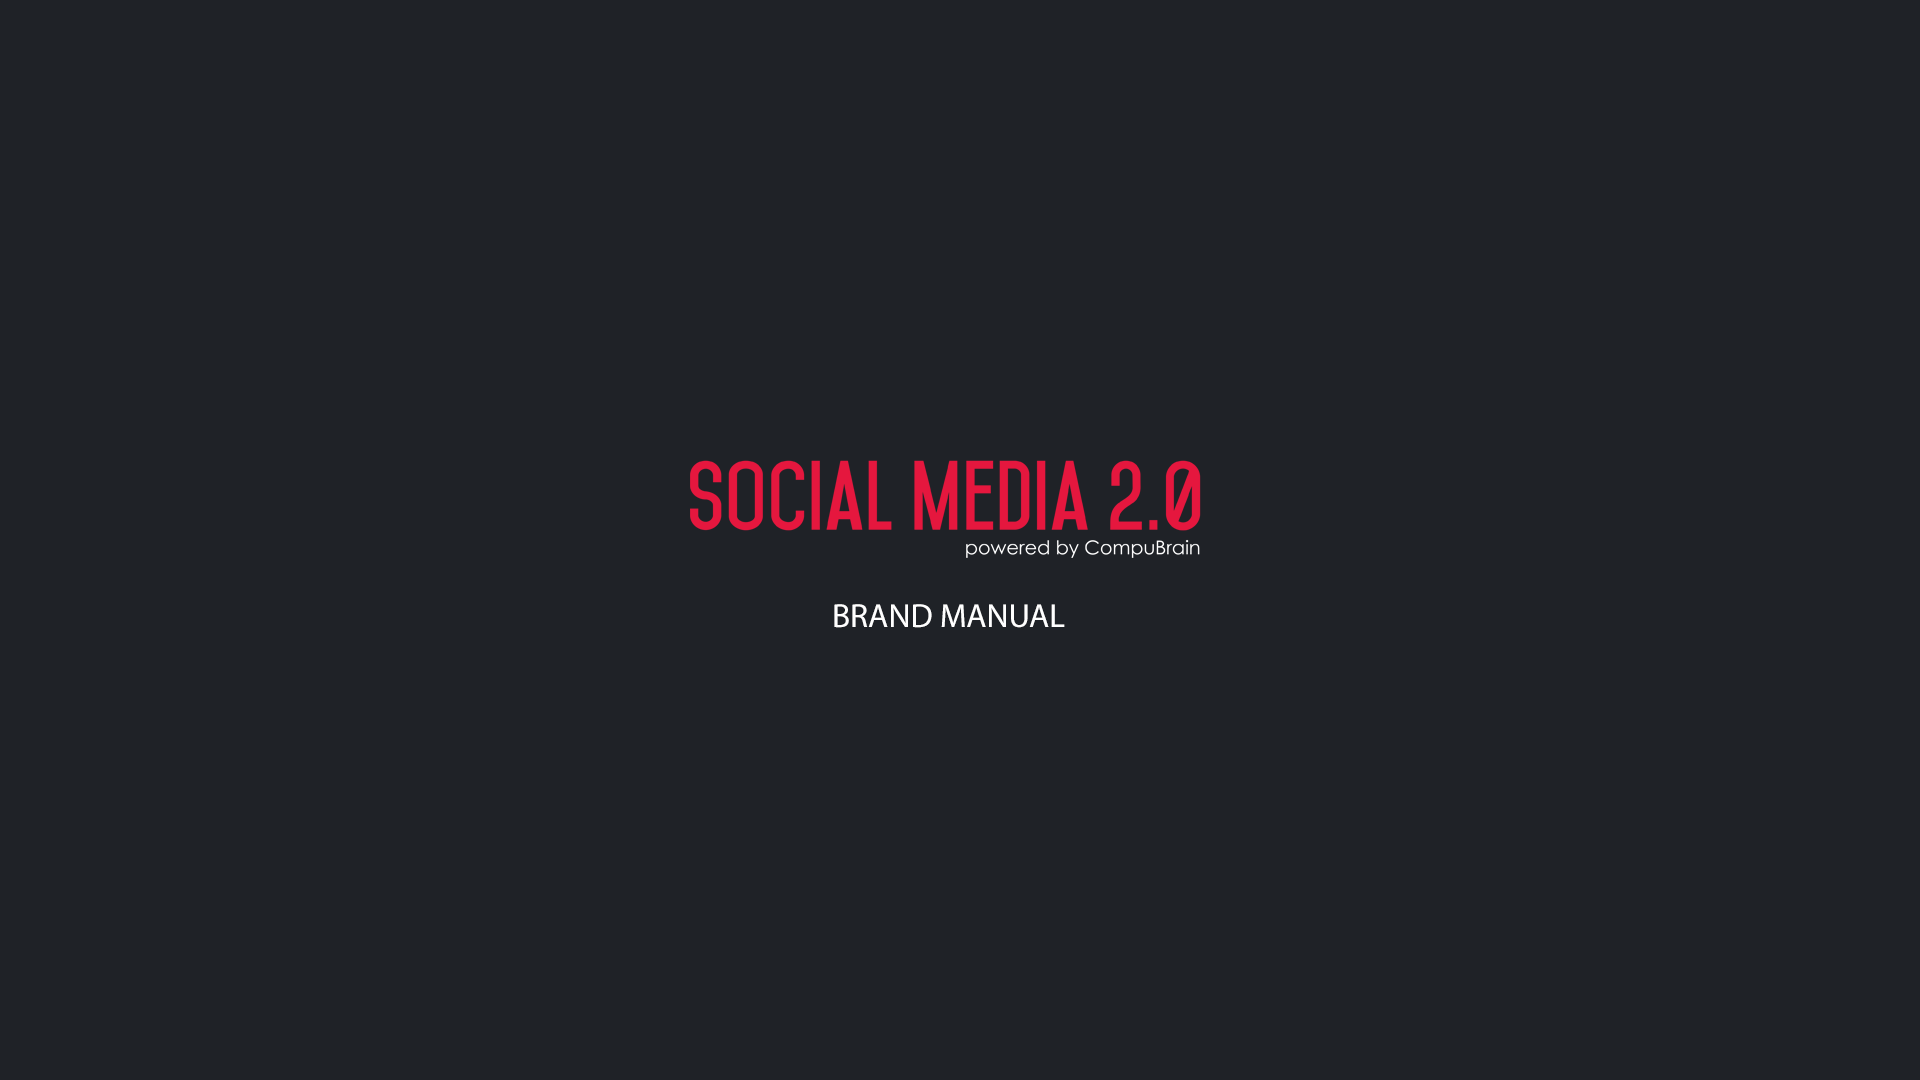 Social Media 2.0 Brand Manual